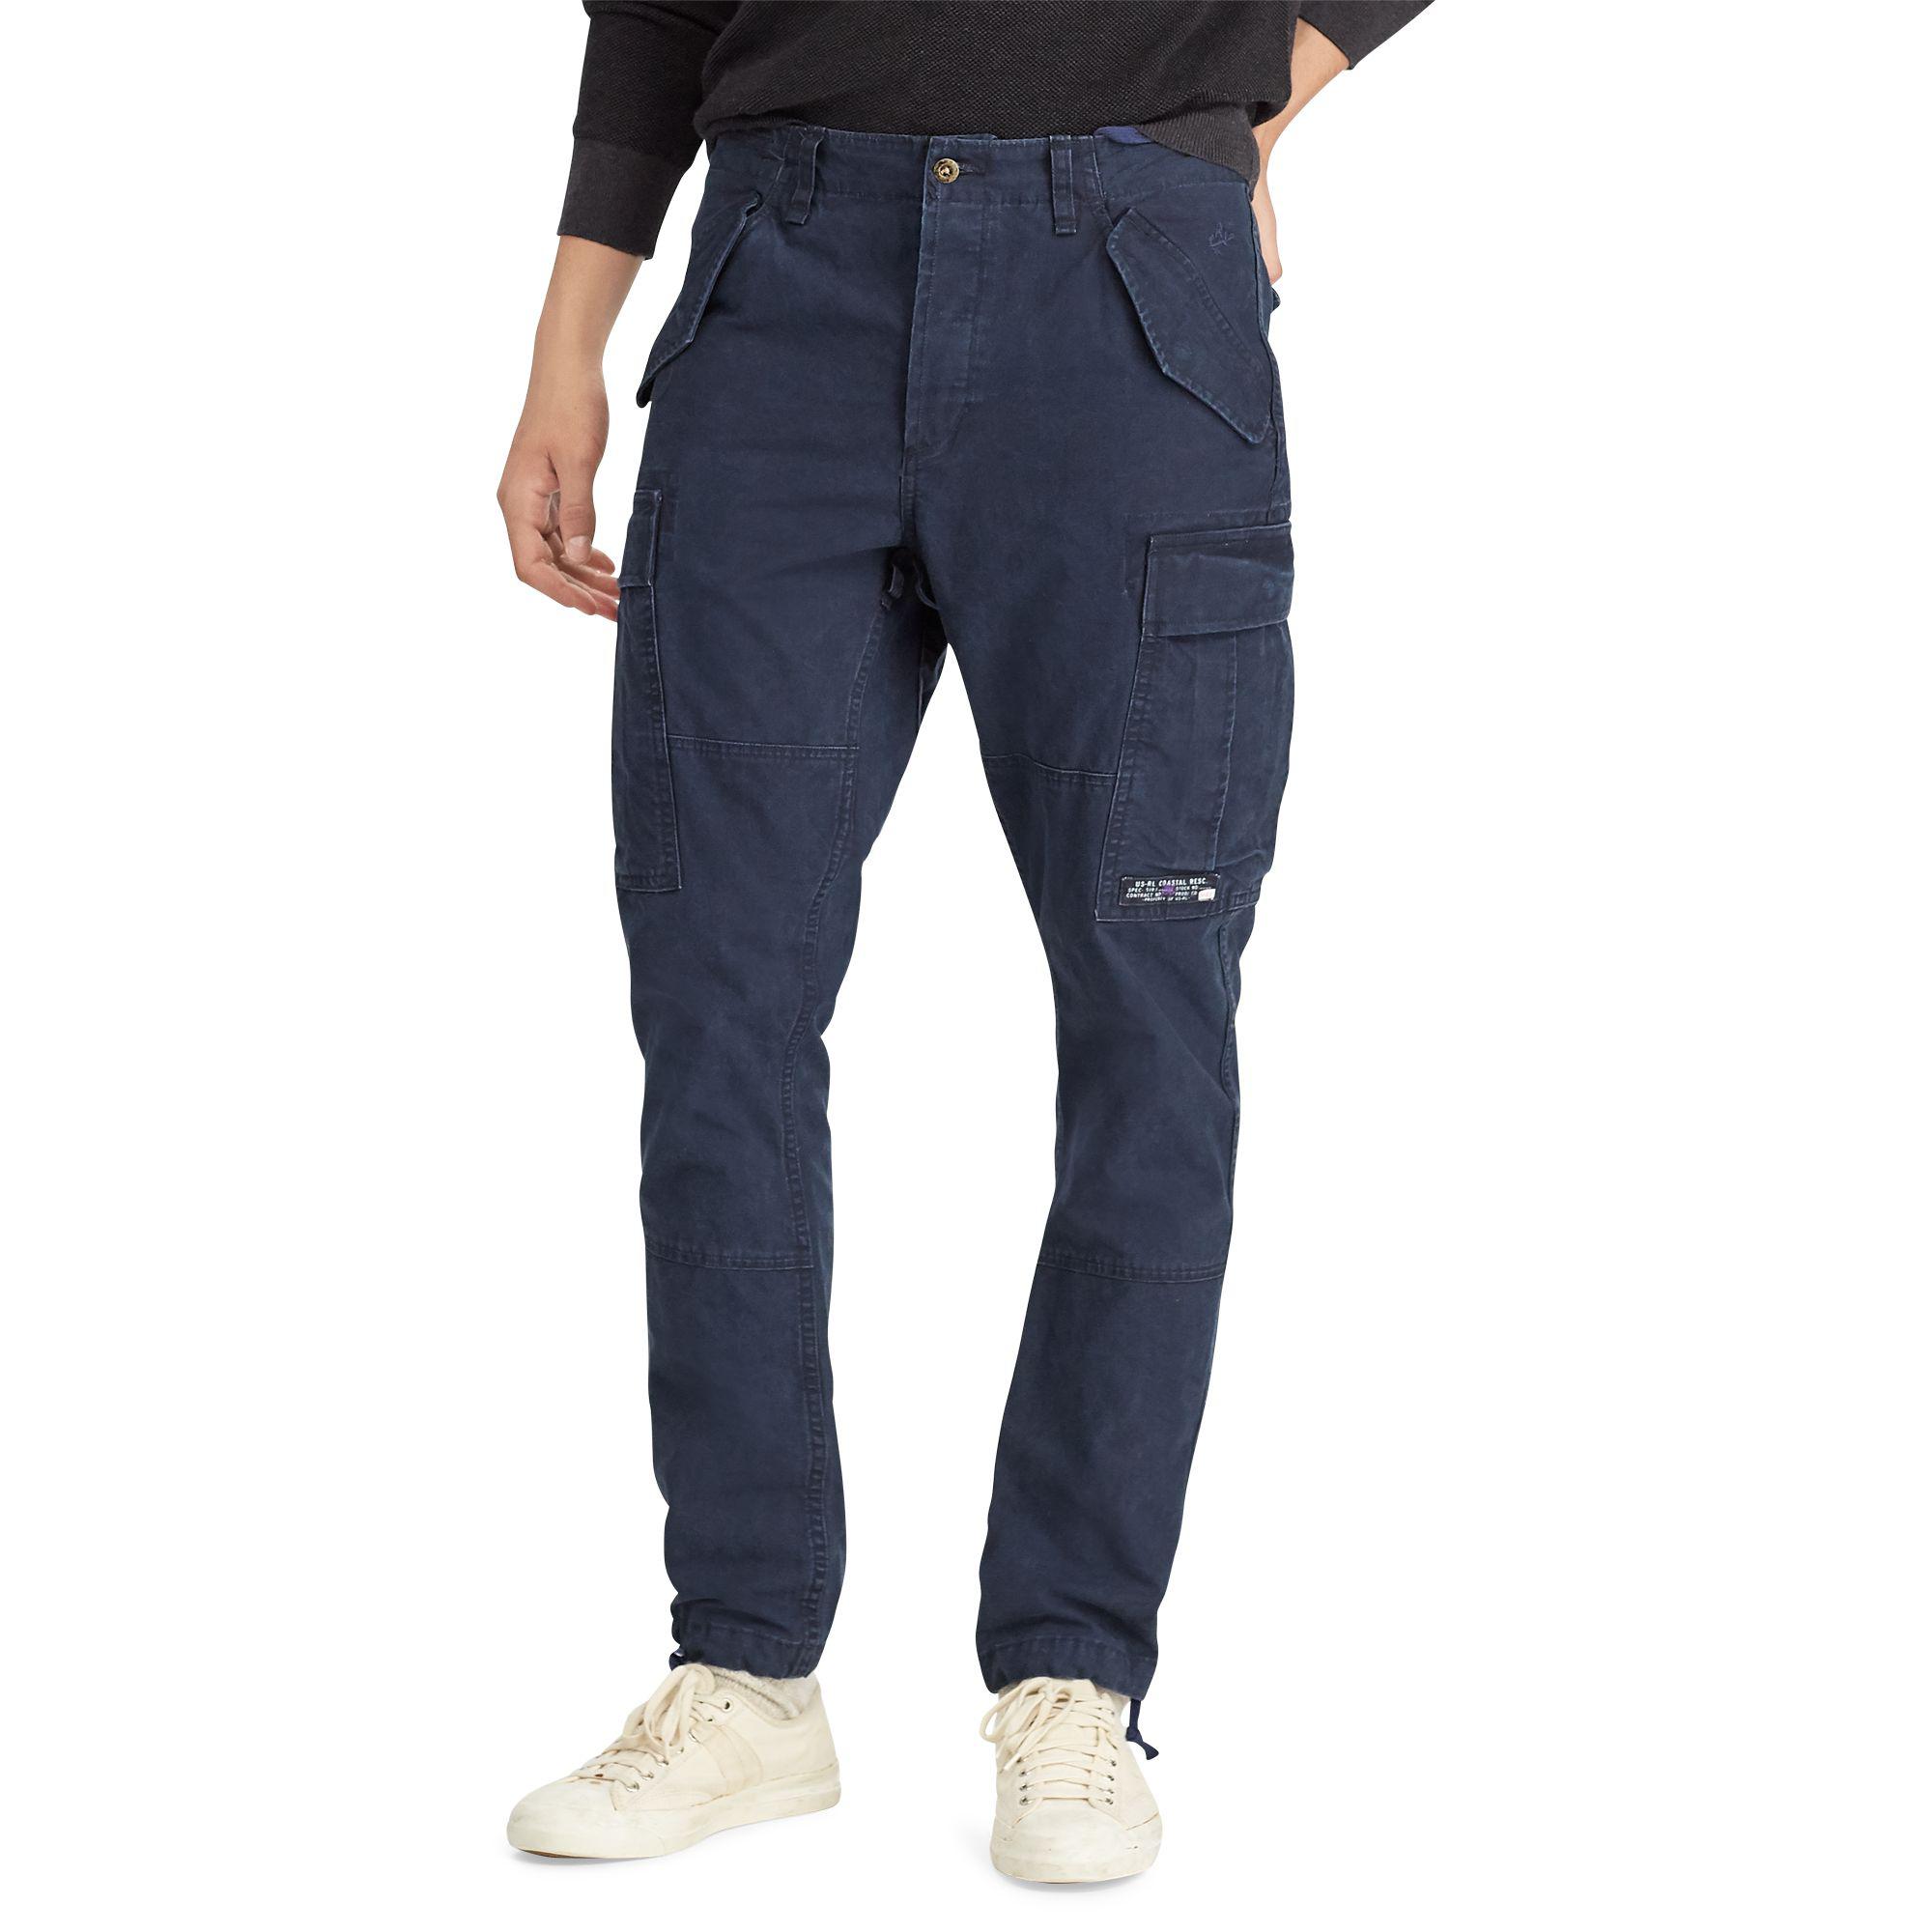 Polo Ralph Lauren Slim Fit Canvas Cargo Trouser in Blue for Men - Lyst